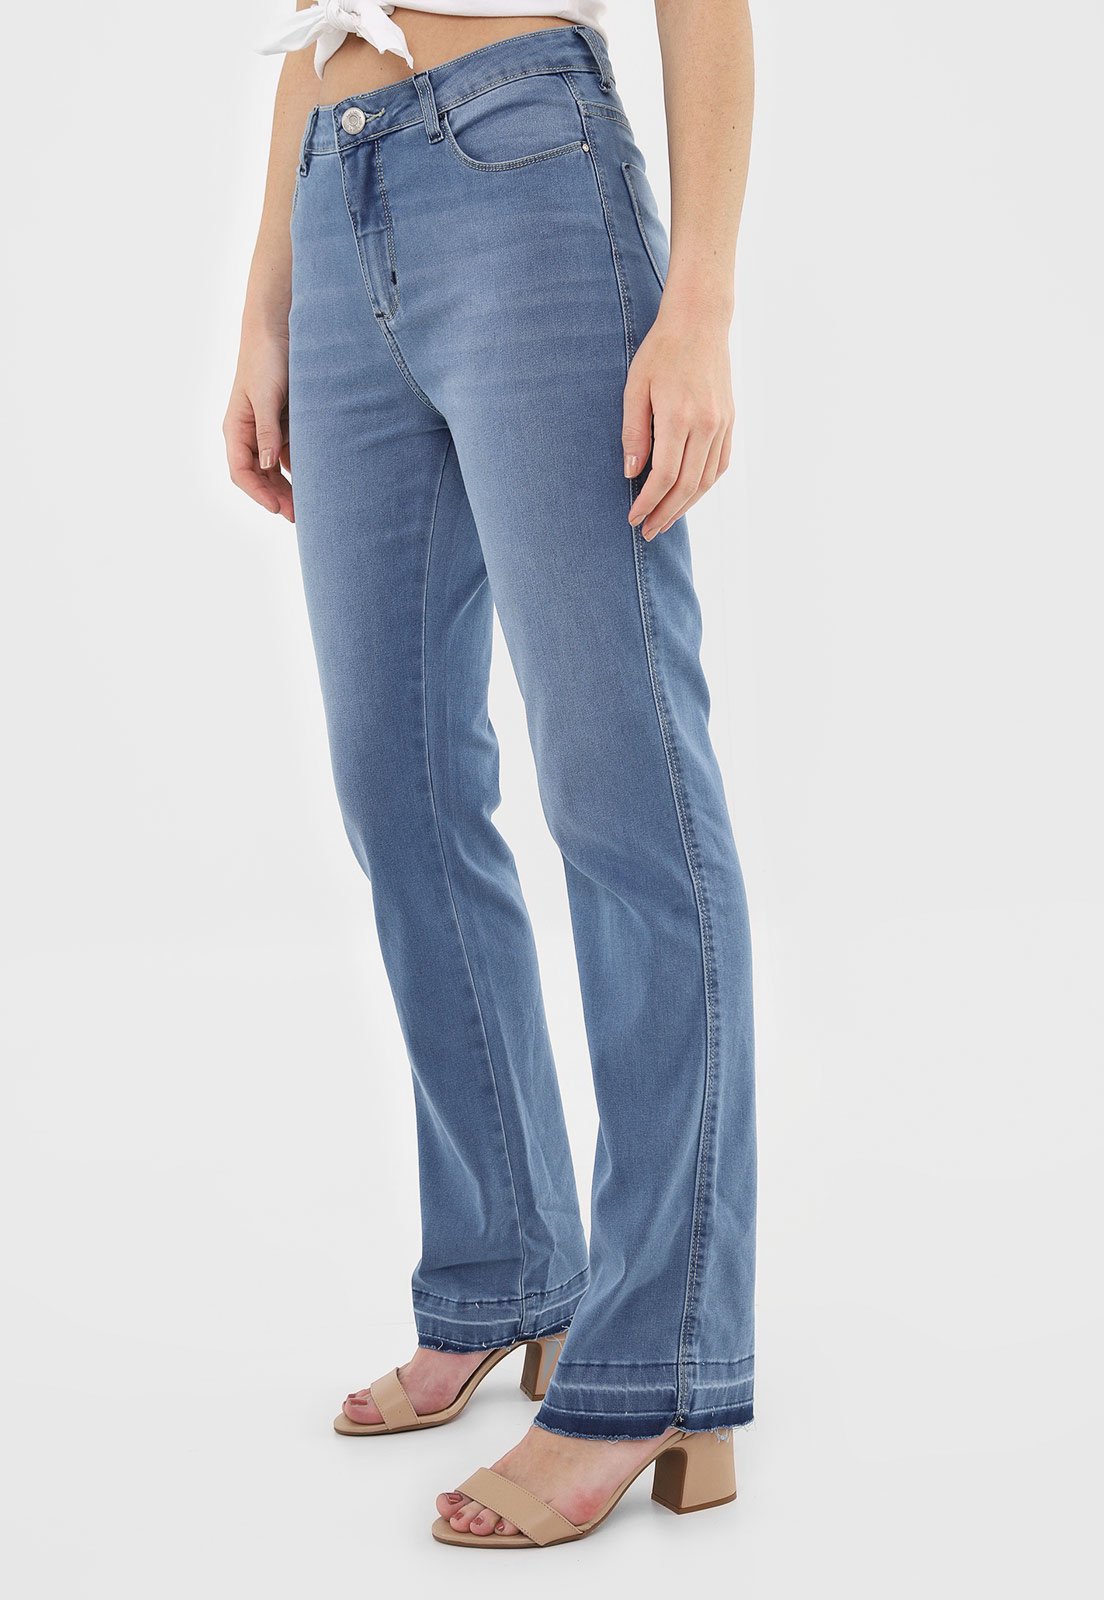 Jeans Hering Reta Estonada Azul - Compre Agora Kanui Brasil